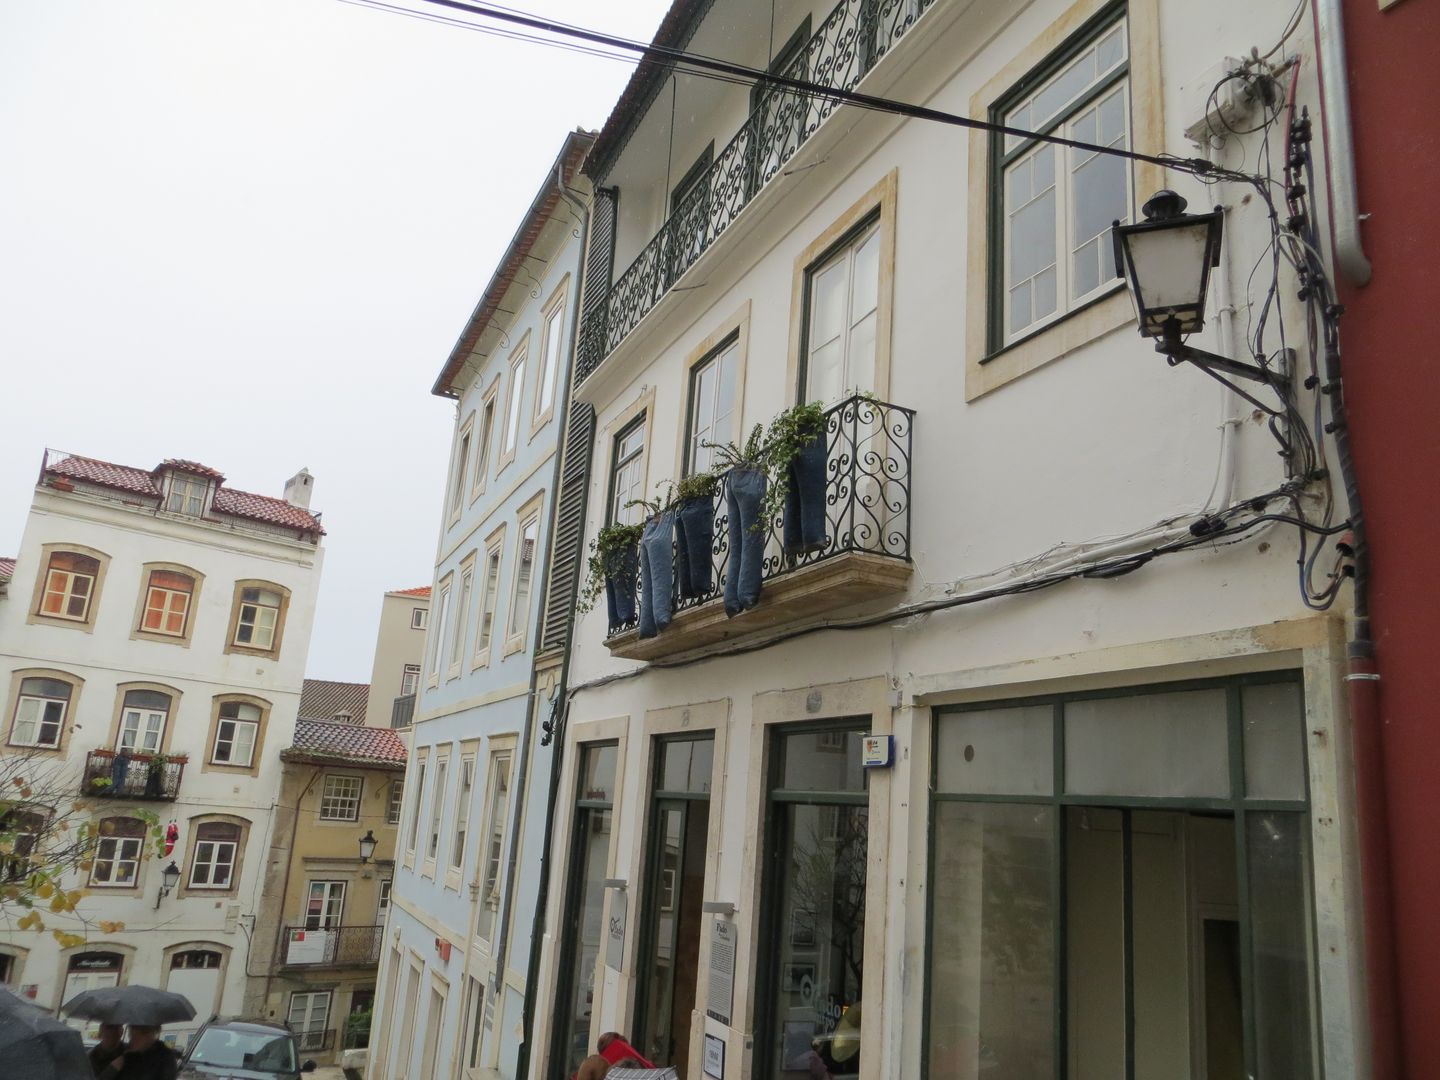 Фотографии Португалии. Брага - Гимараэш - Коимбра - Томар. Январь 2014